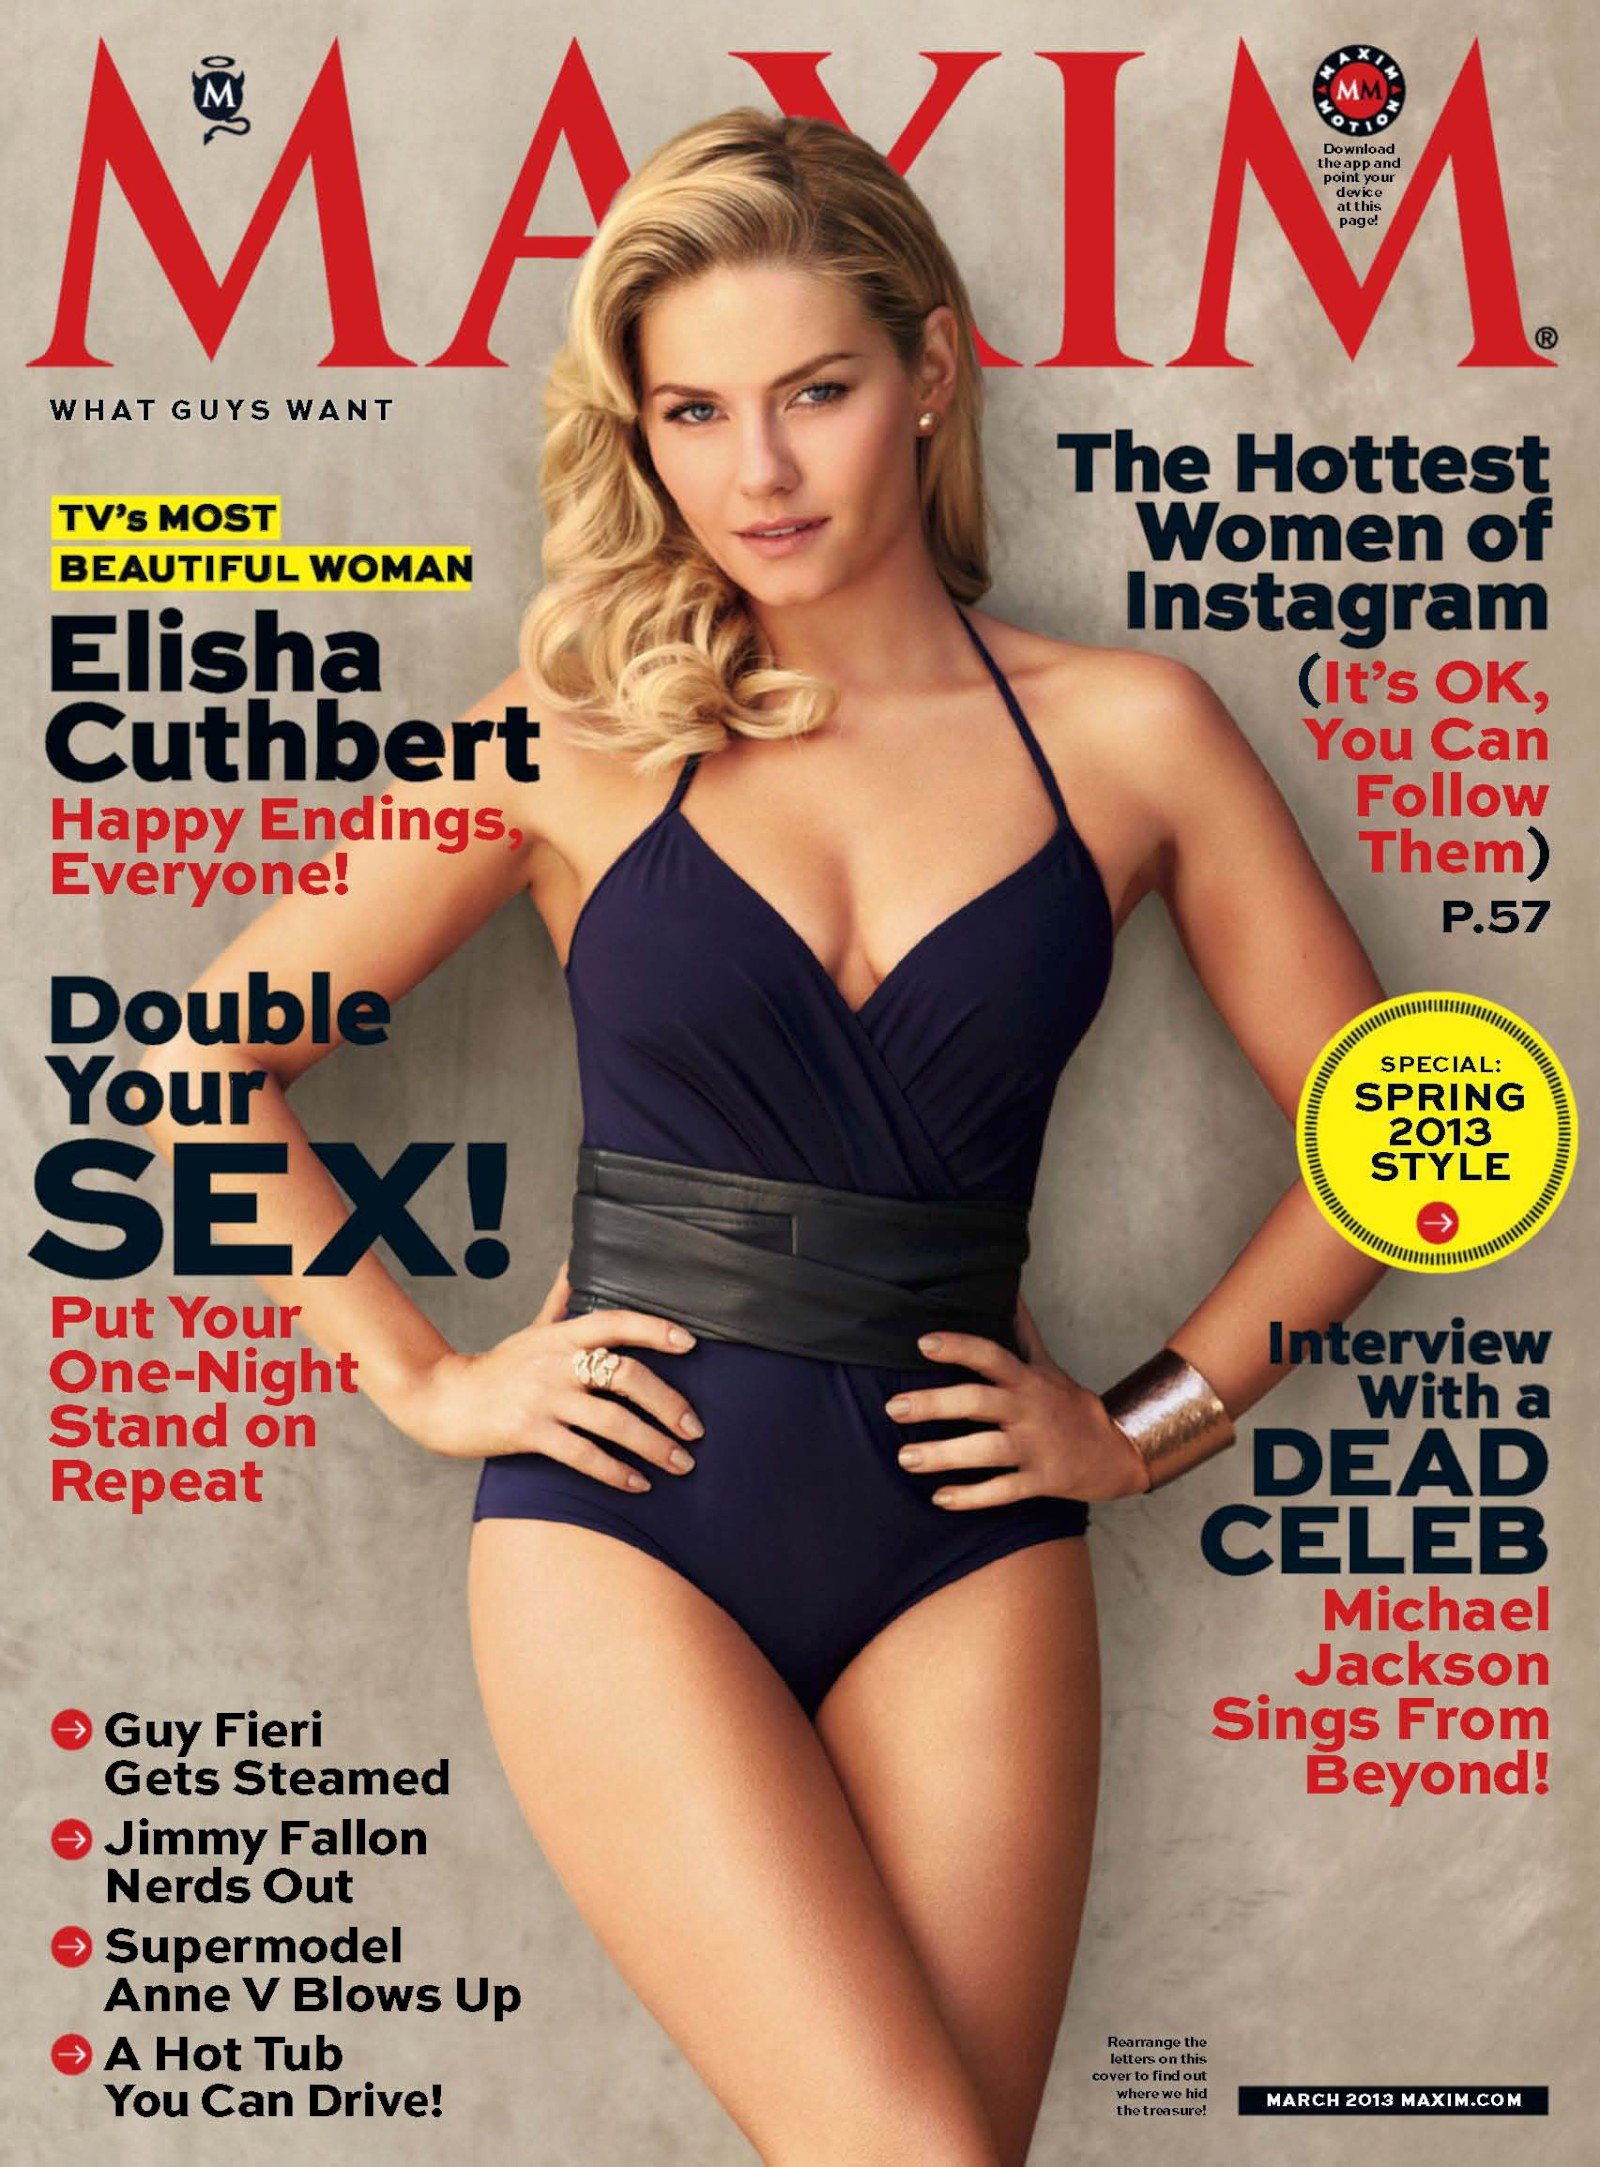 Элиша Катберт на обложке журнала "Maxim", март 2013 года.